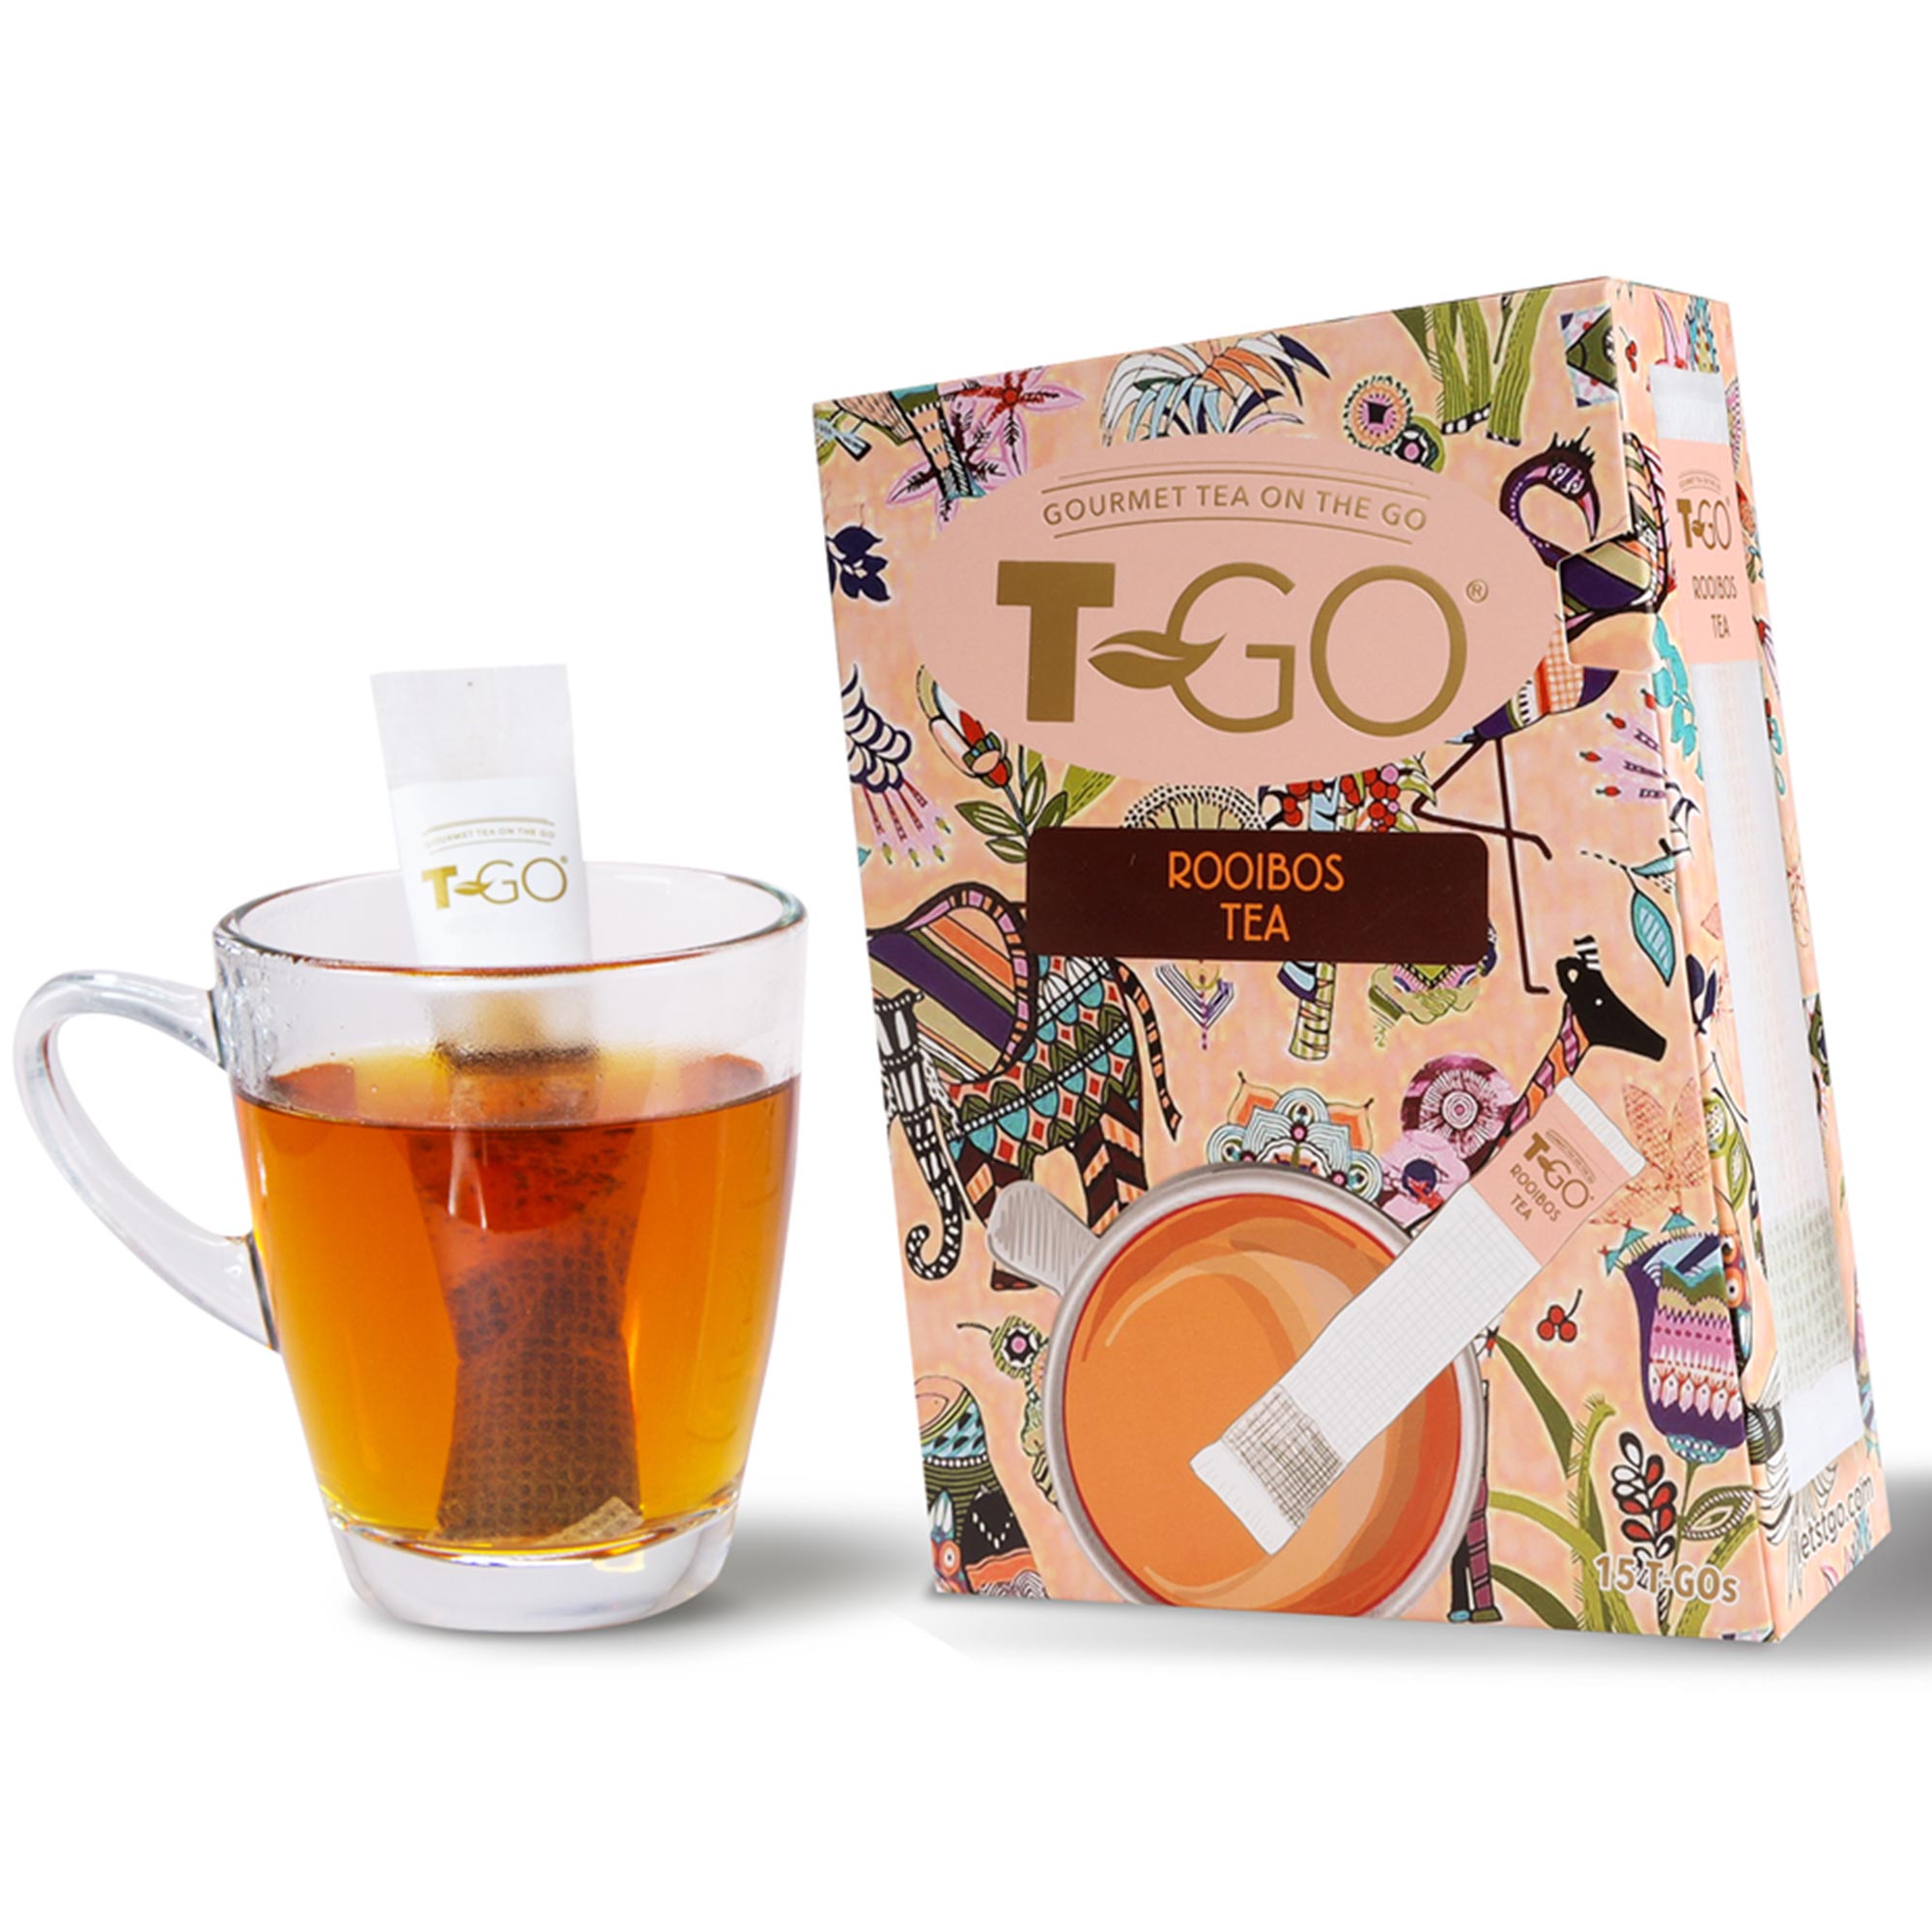 T-Go Rooibos Tea